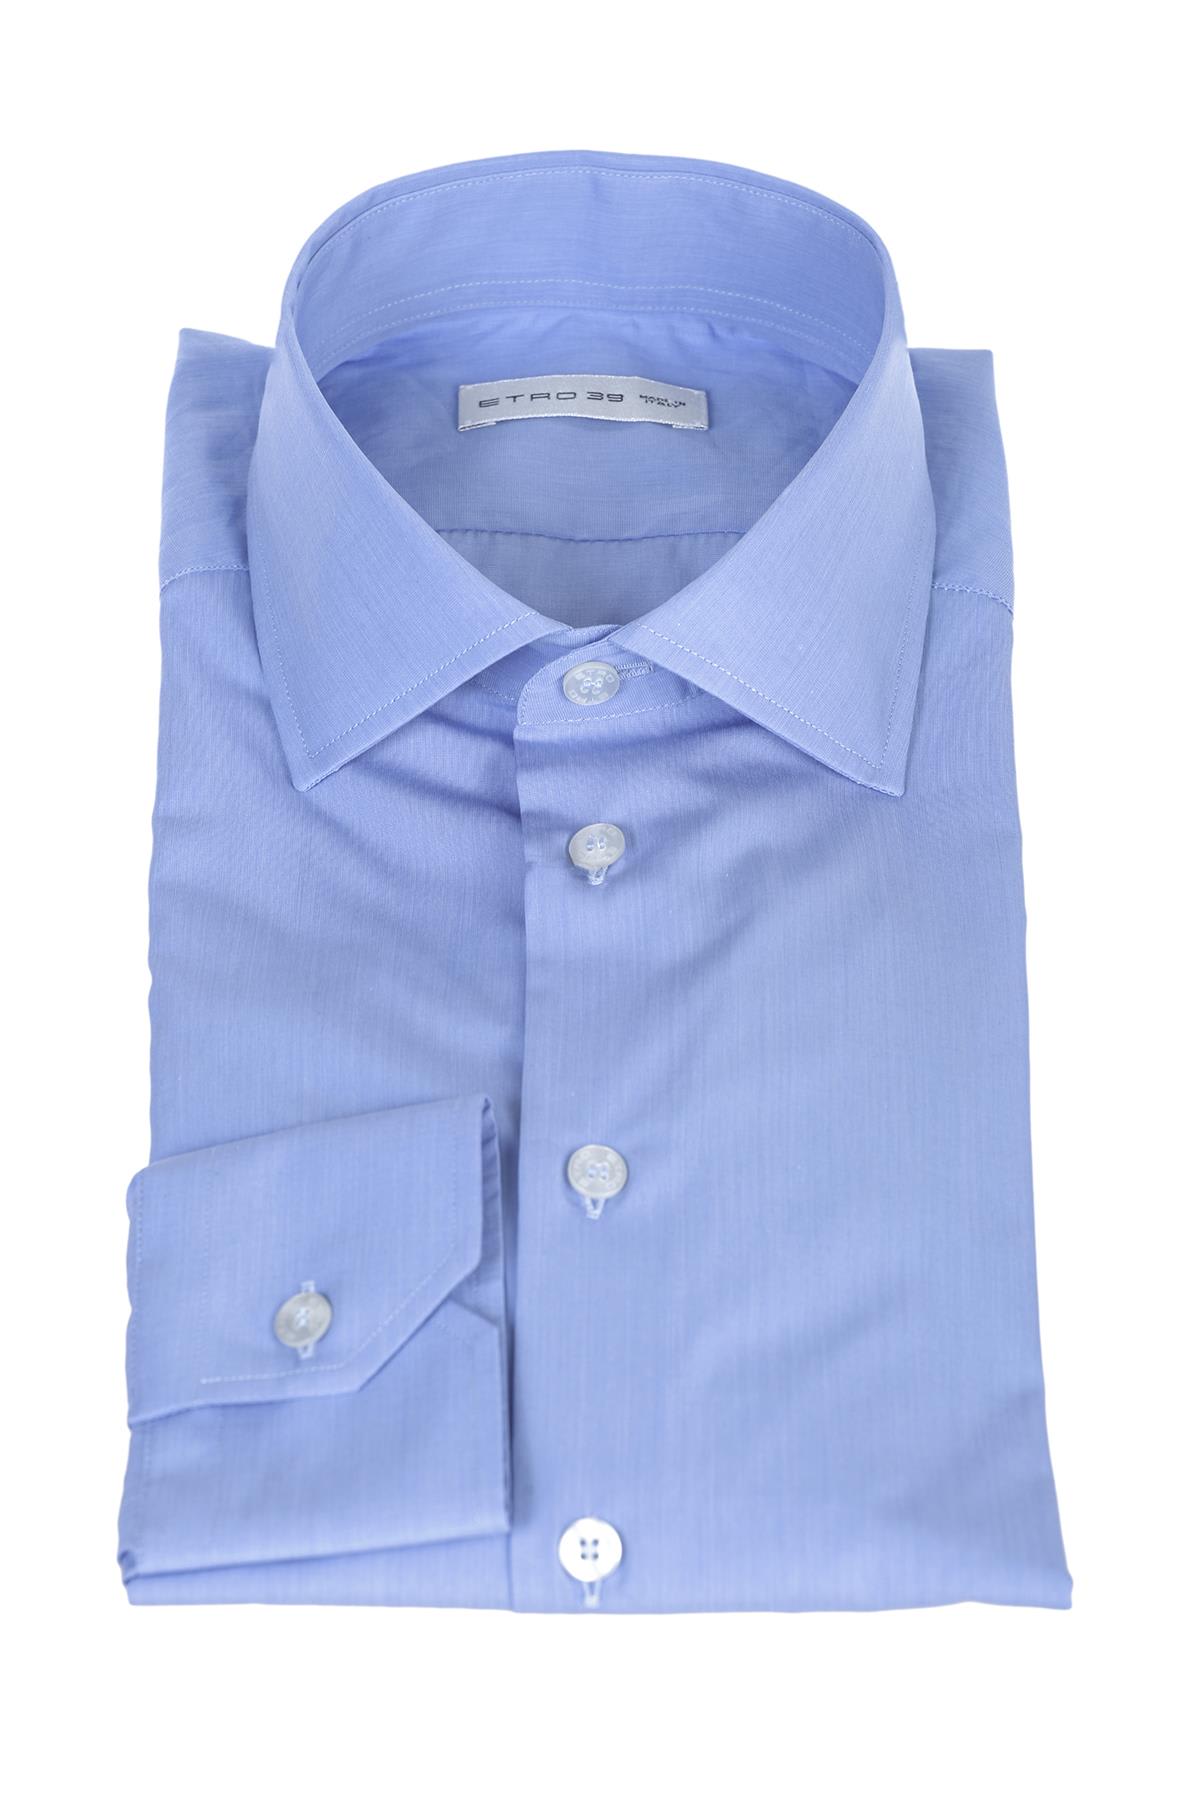 Etro light blue cotton shirt